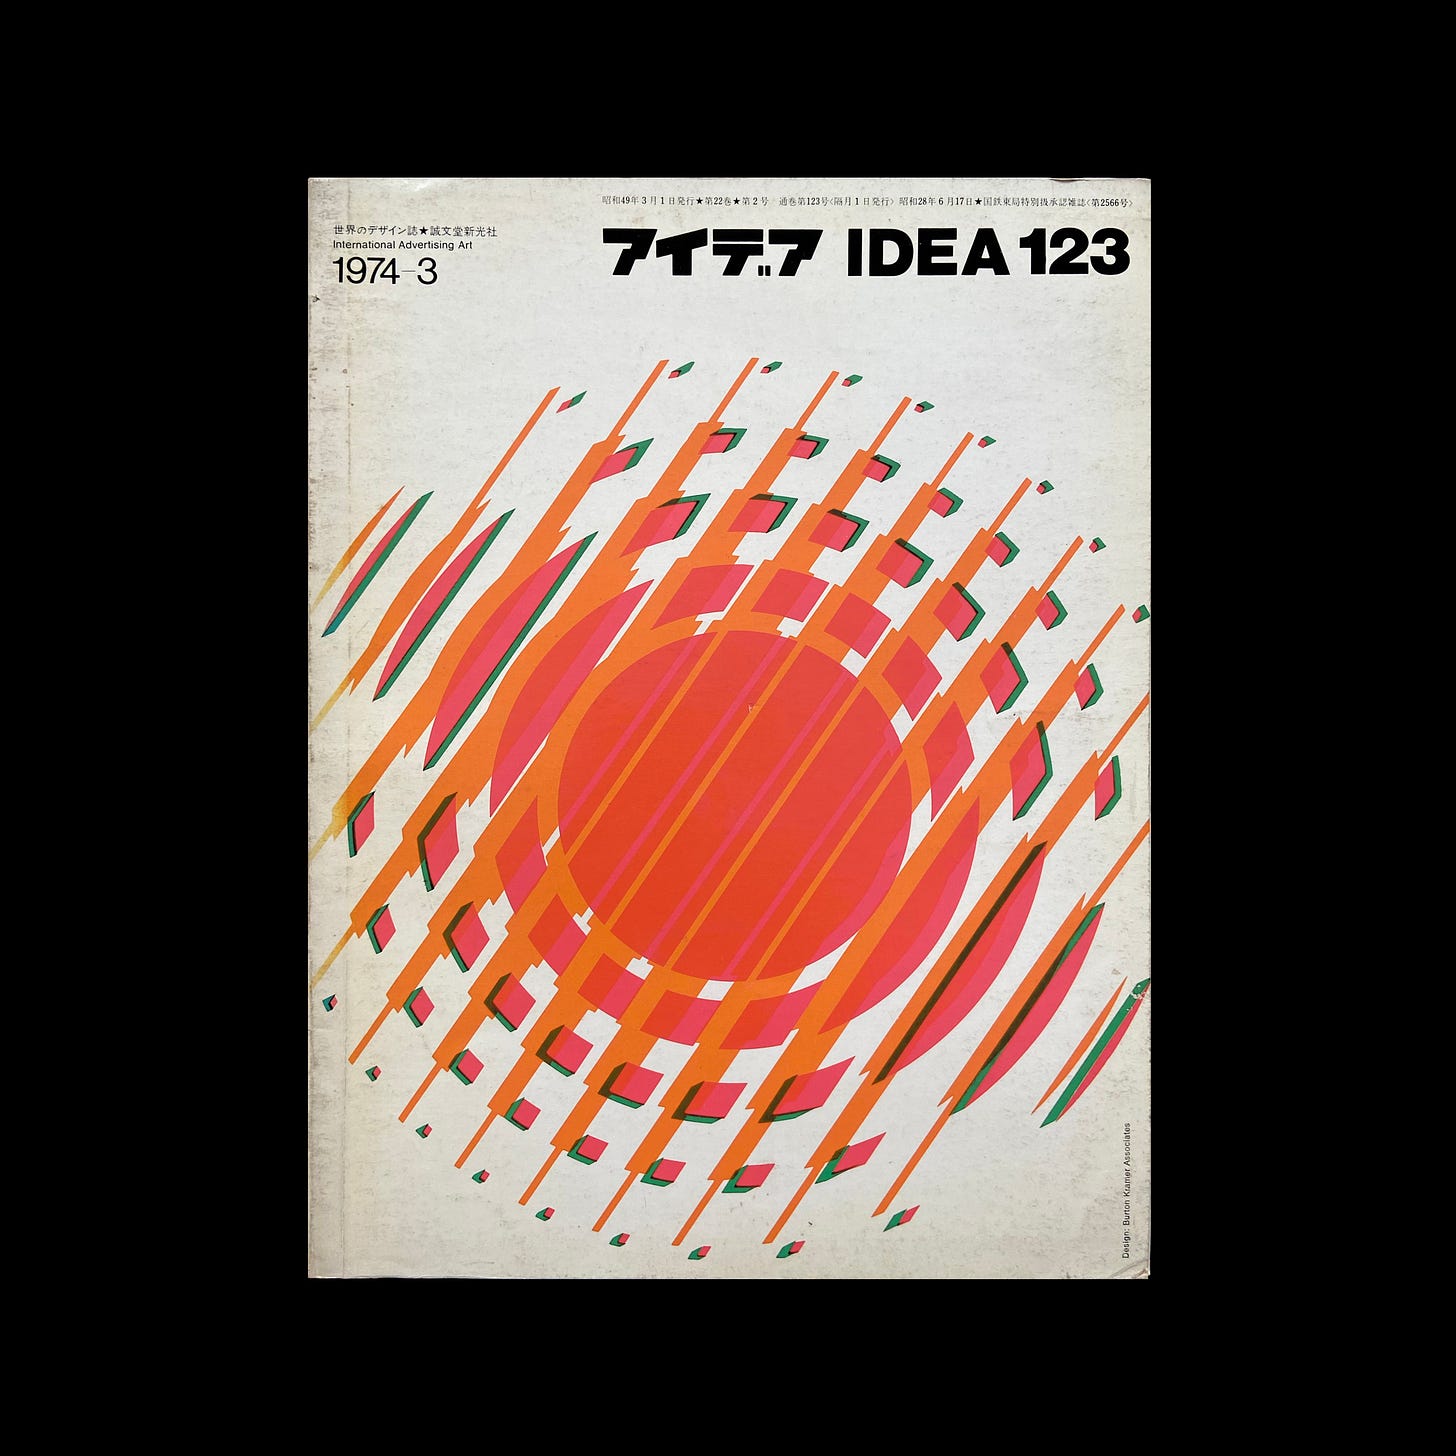 Idea Magazine, Issue 123, Burton Kramer Associates cover, 1974